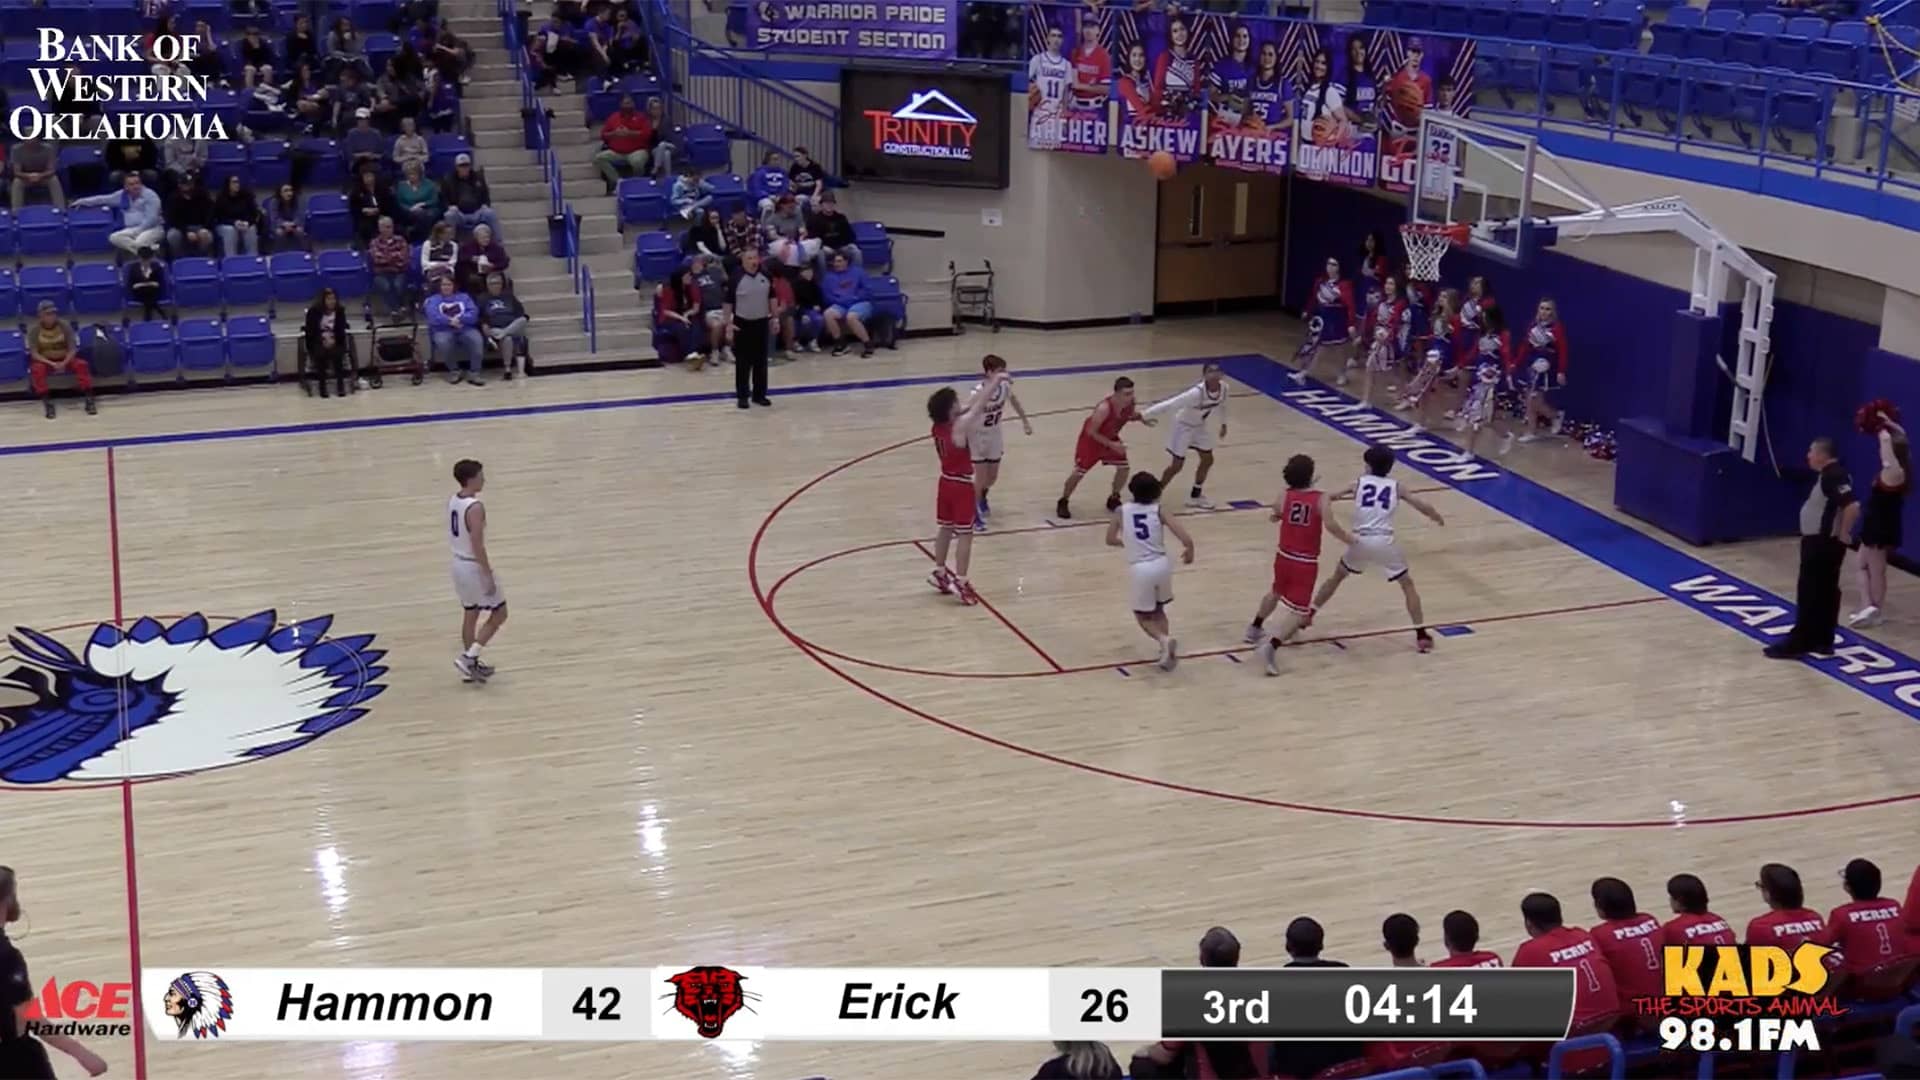 Erick Bearcats vs. Hammon Warriors Boys Basketball Game - Intense Matchup